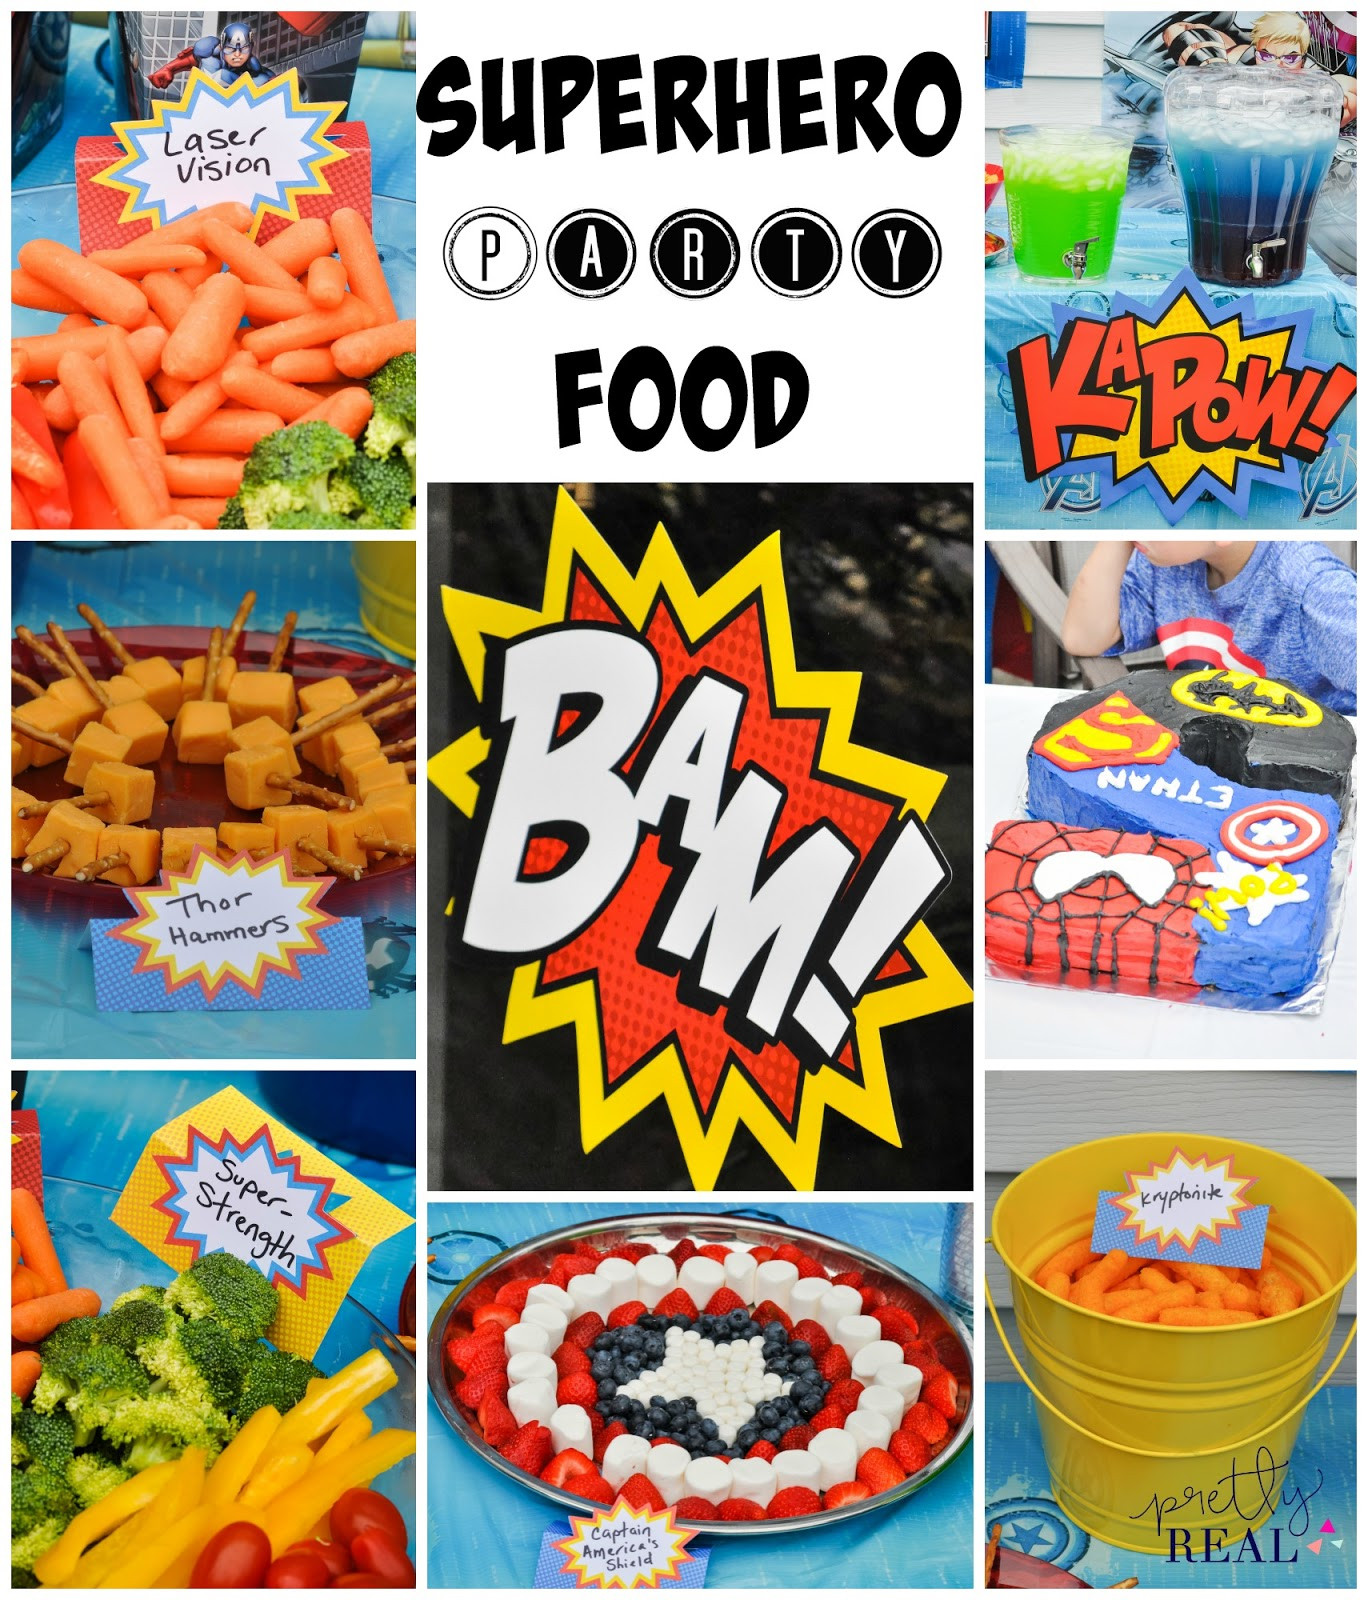 Superhero Birthday Party Food Ideas
 Super Cute Superhero Party with Zero DIY Pretty Real